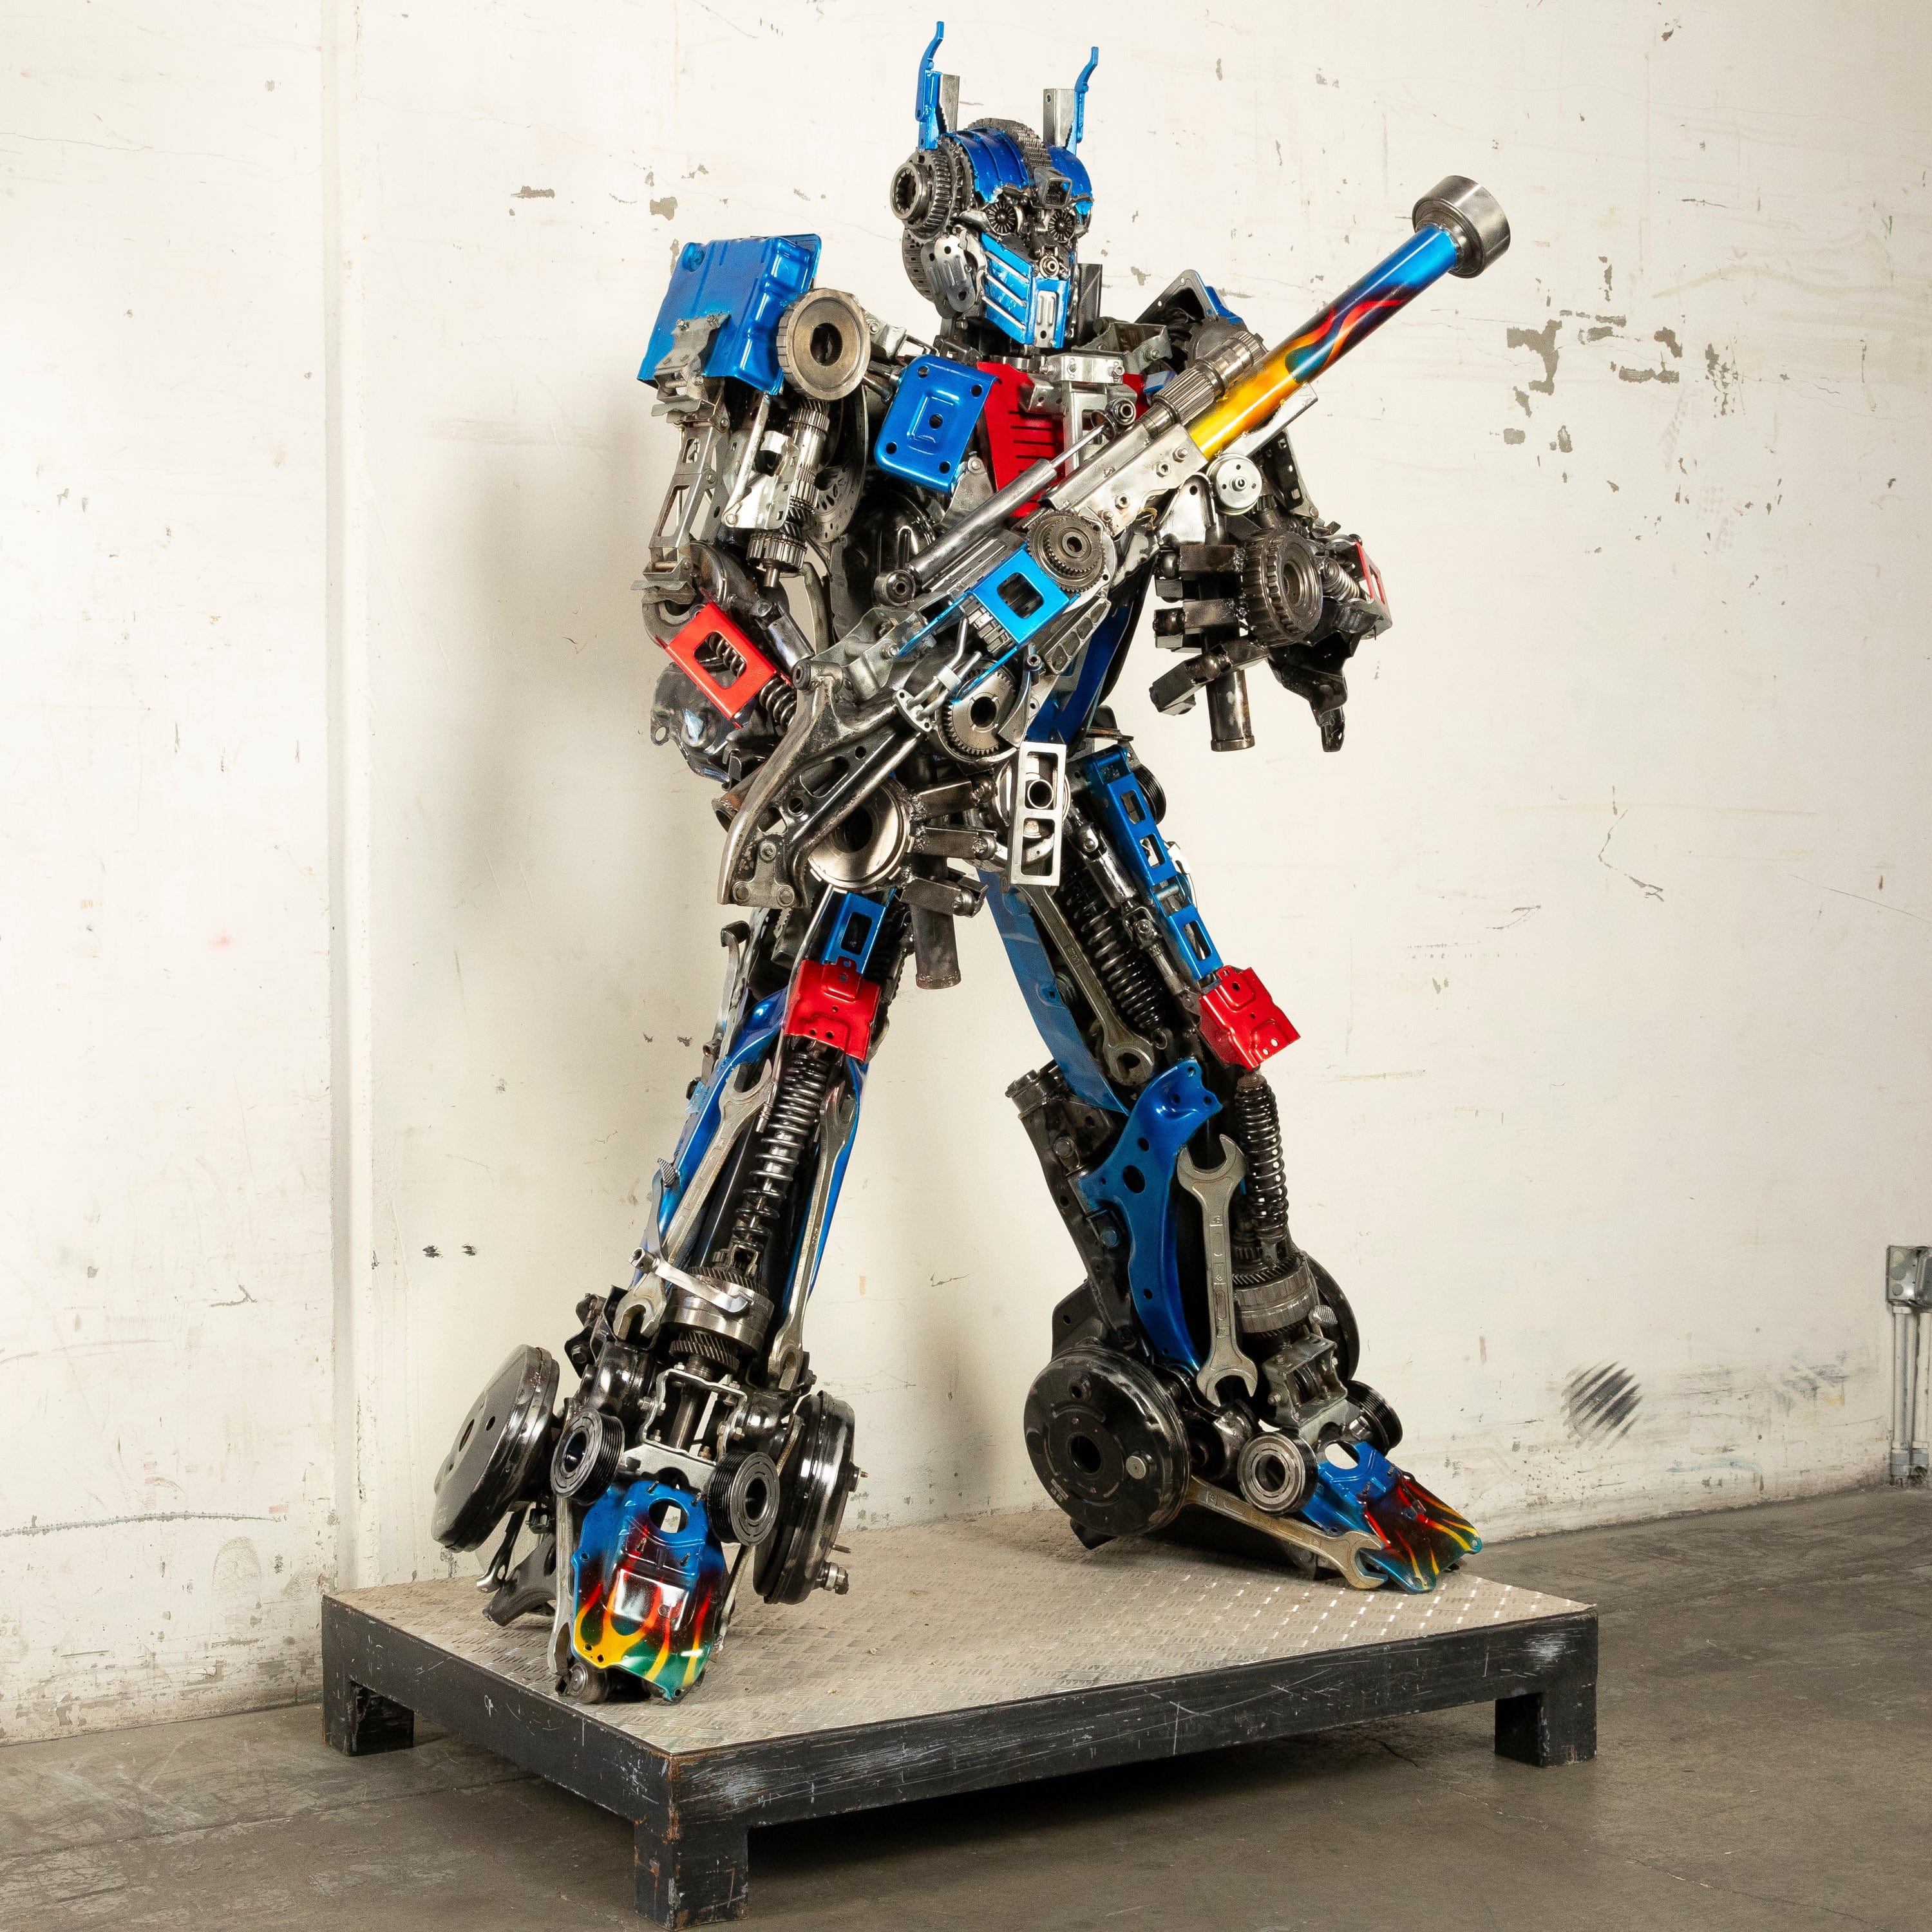 Kalifano Recycled Metal Art 79" Optimus Prime Inspired Recycled Metal Art Sculpture RMS-OP200-S21